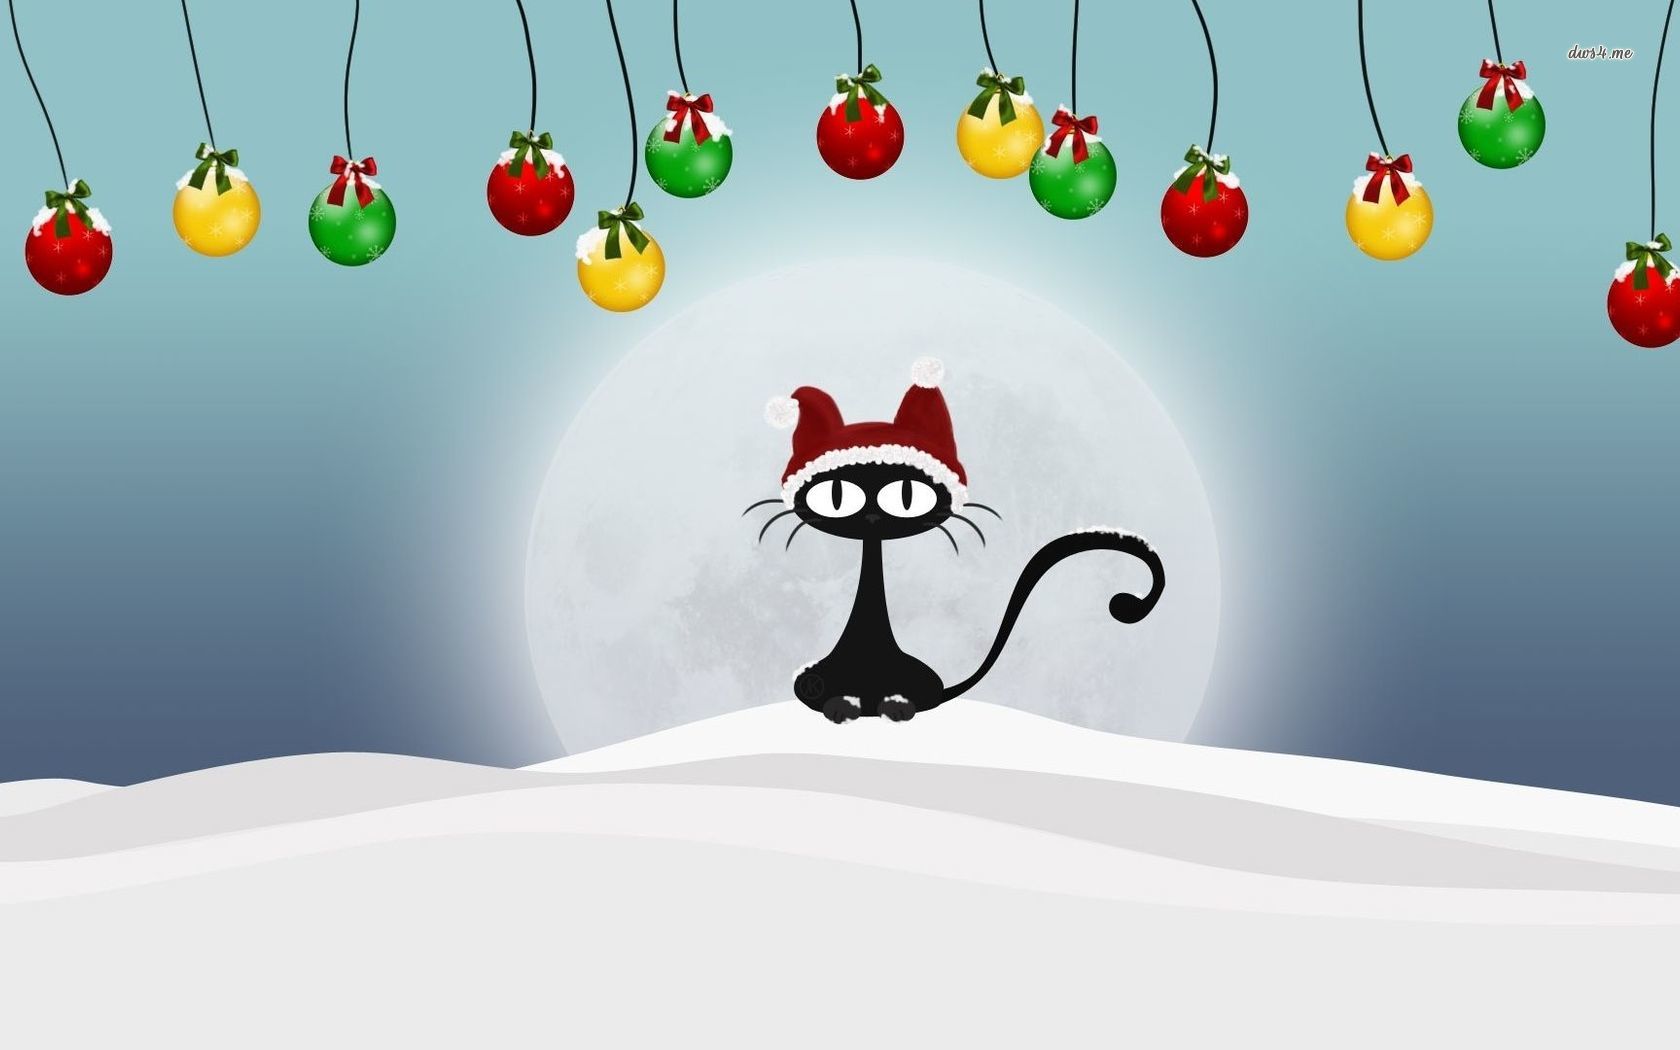 Black cat on Christmas night wallpaper 1280x800 Black cat on Christmas